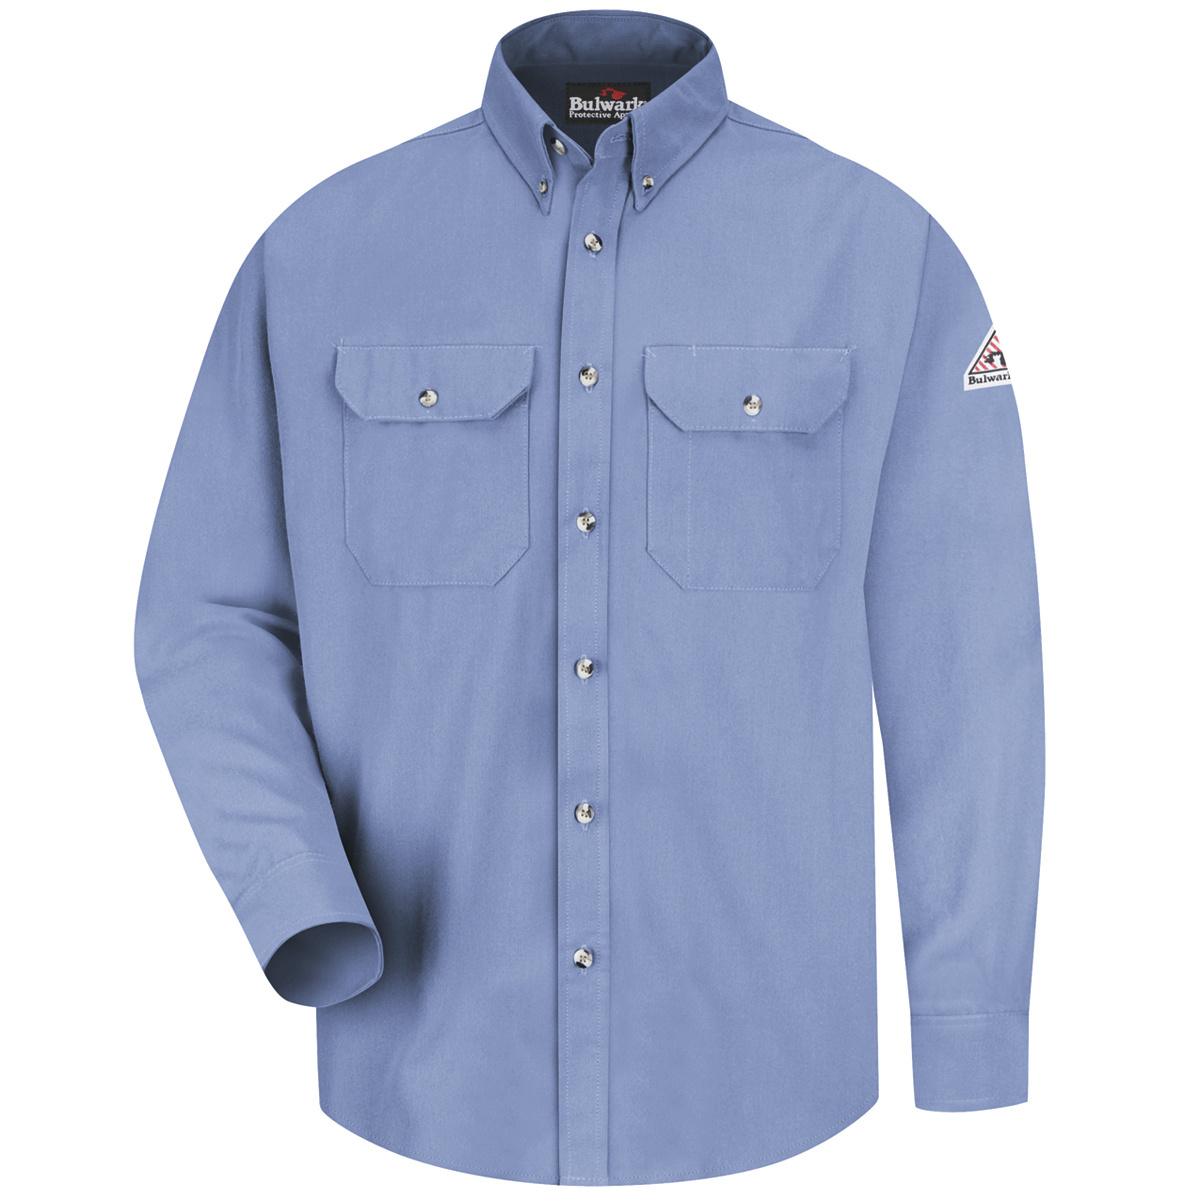 Bulwark® Small| Regular Light Blue Modacrylic/Lyocell/Aramid Flame Resistant Dress Uniform Shirt With Button Front Closure